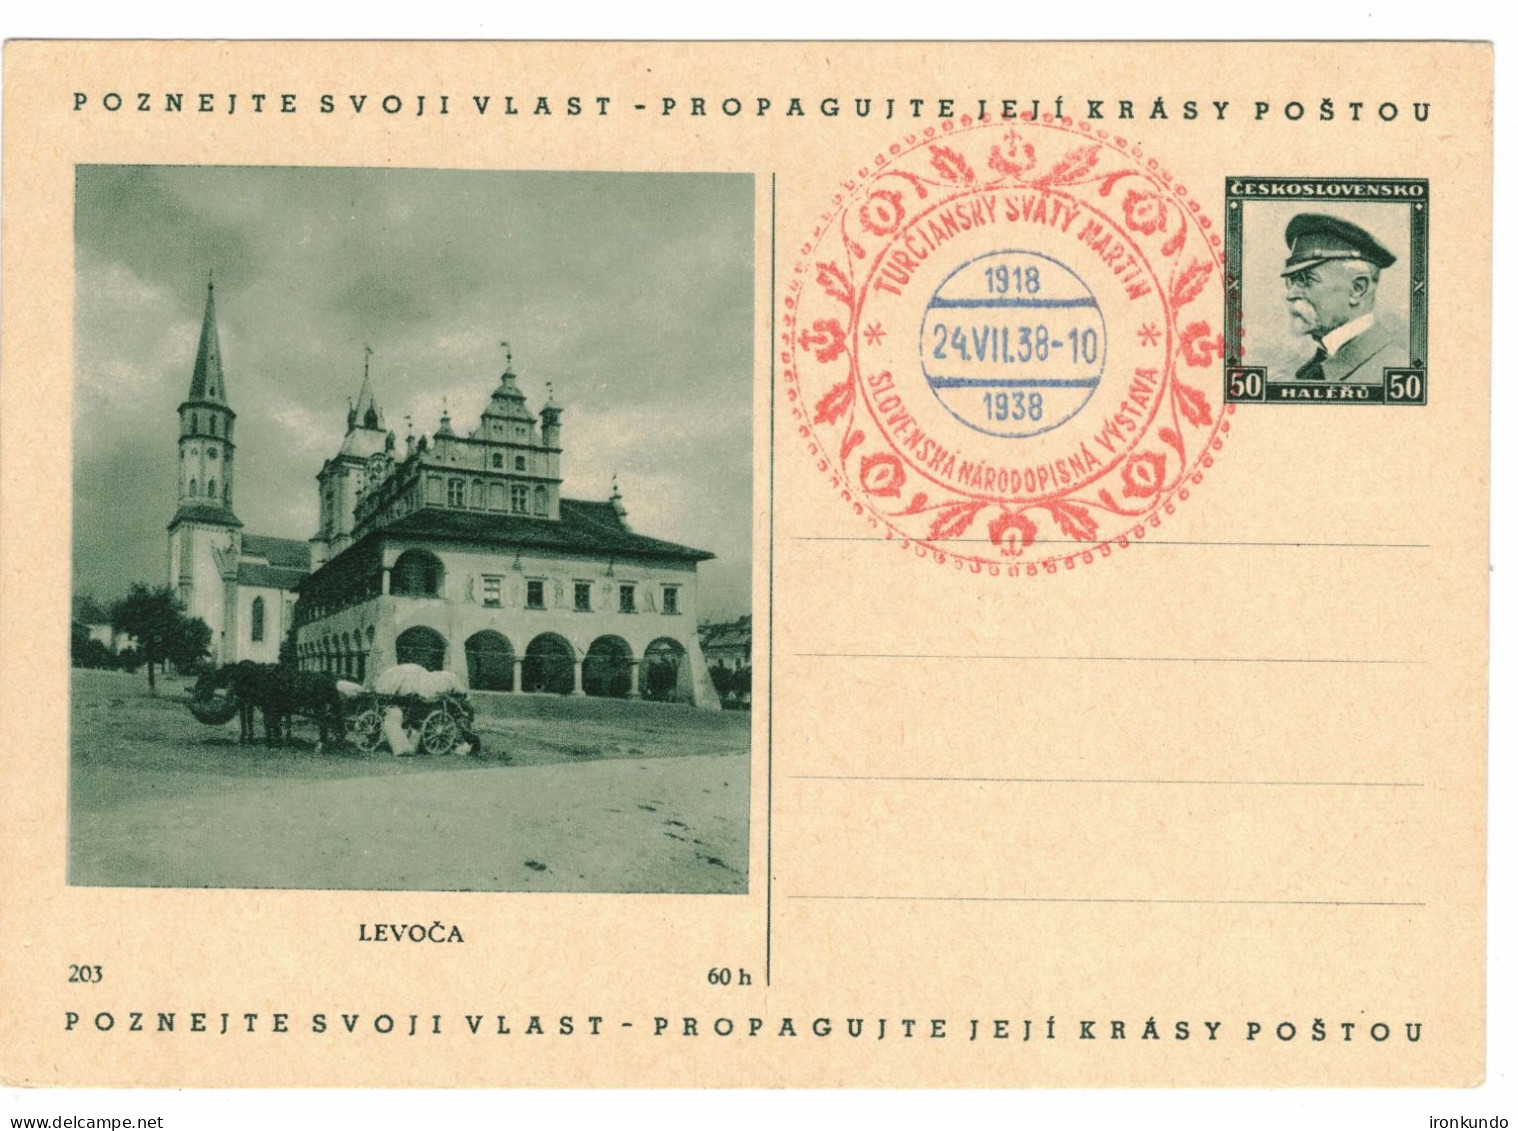 Illustrated Postal Card Levoča - CDV69 203 - Postcards